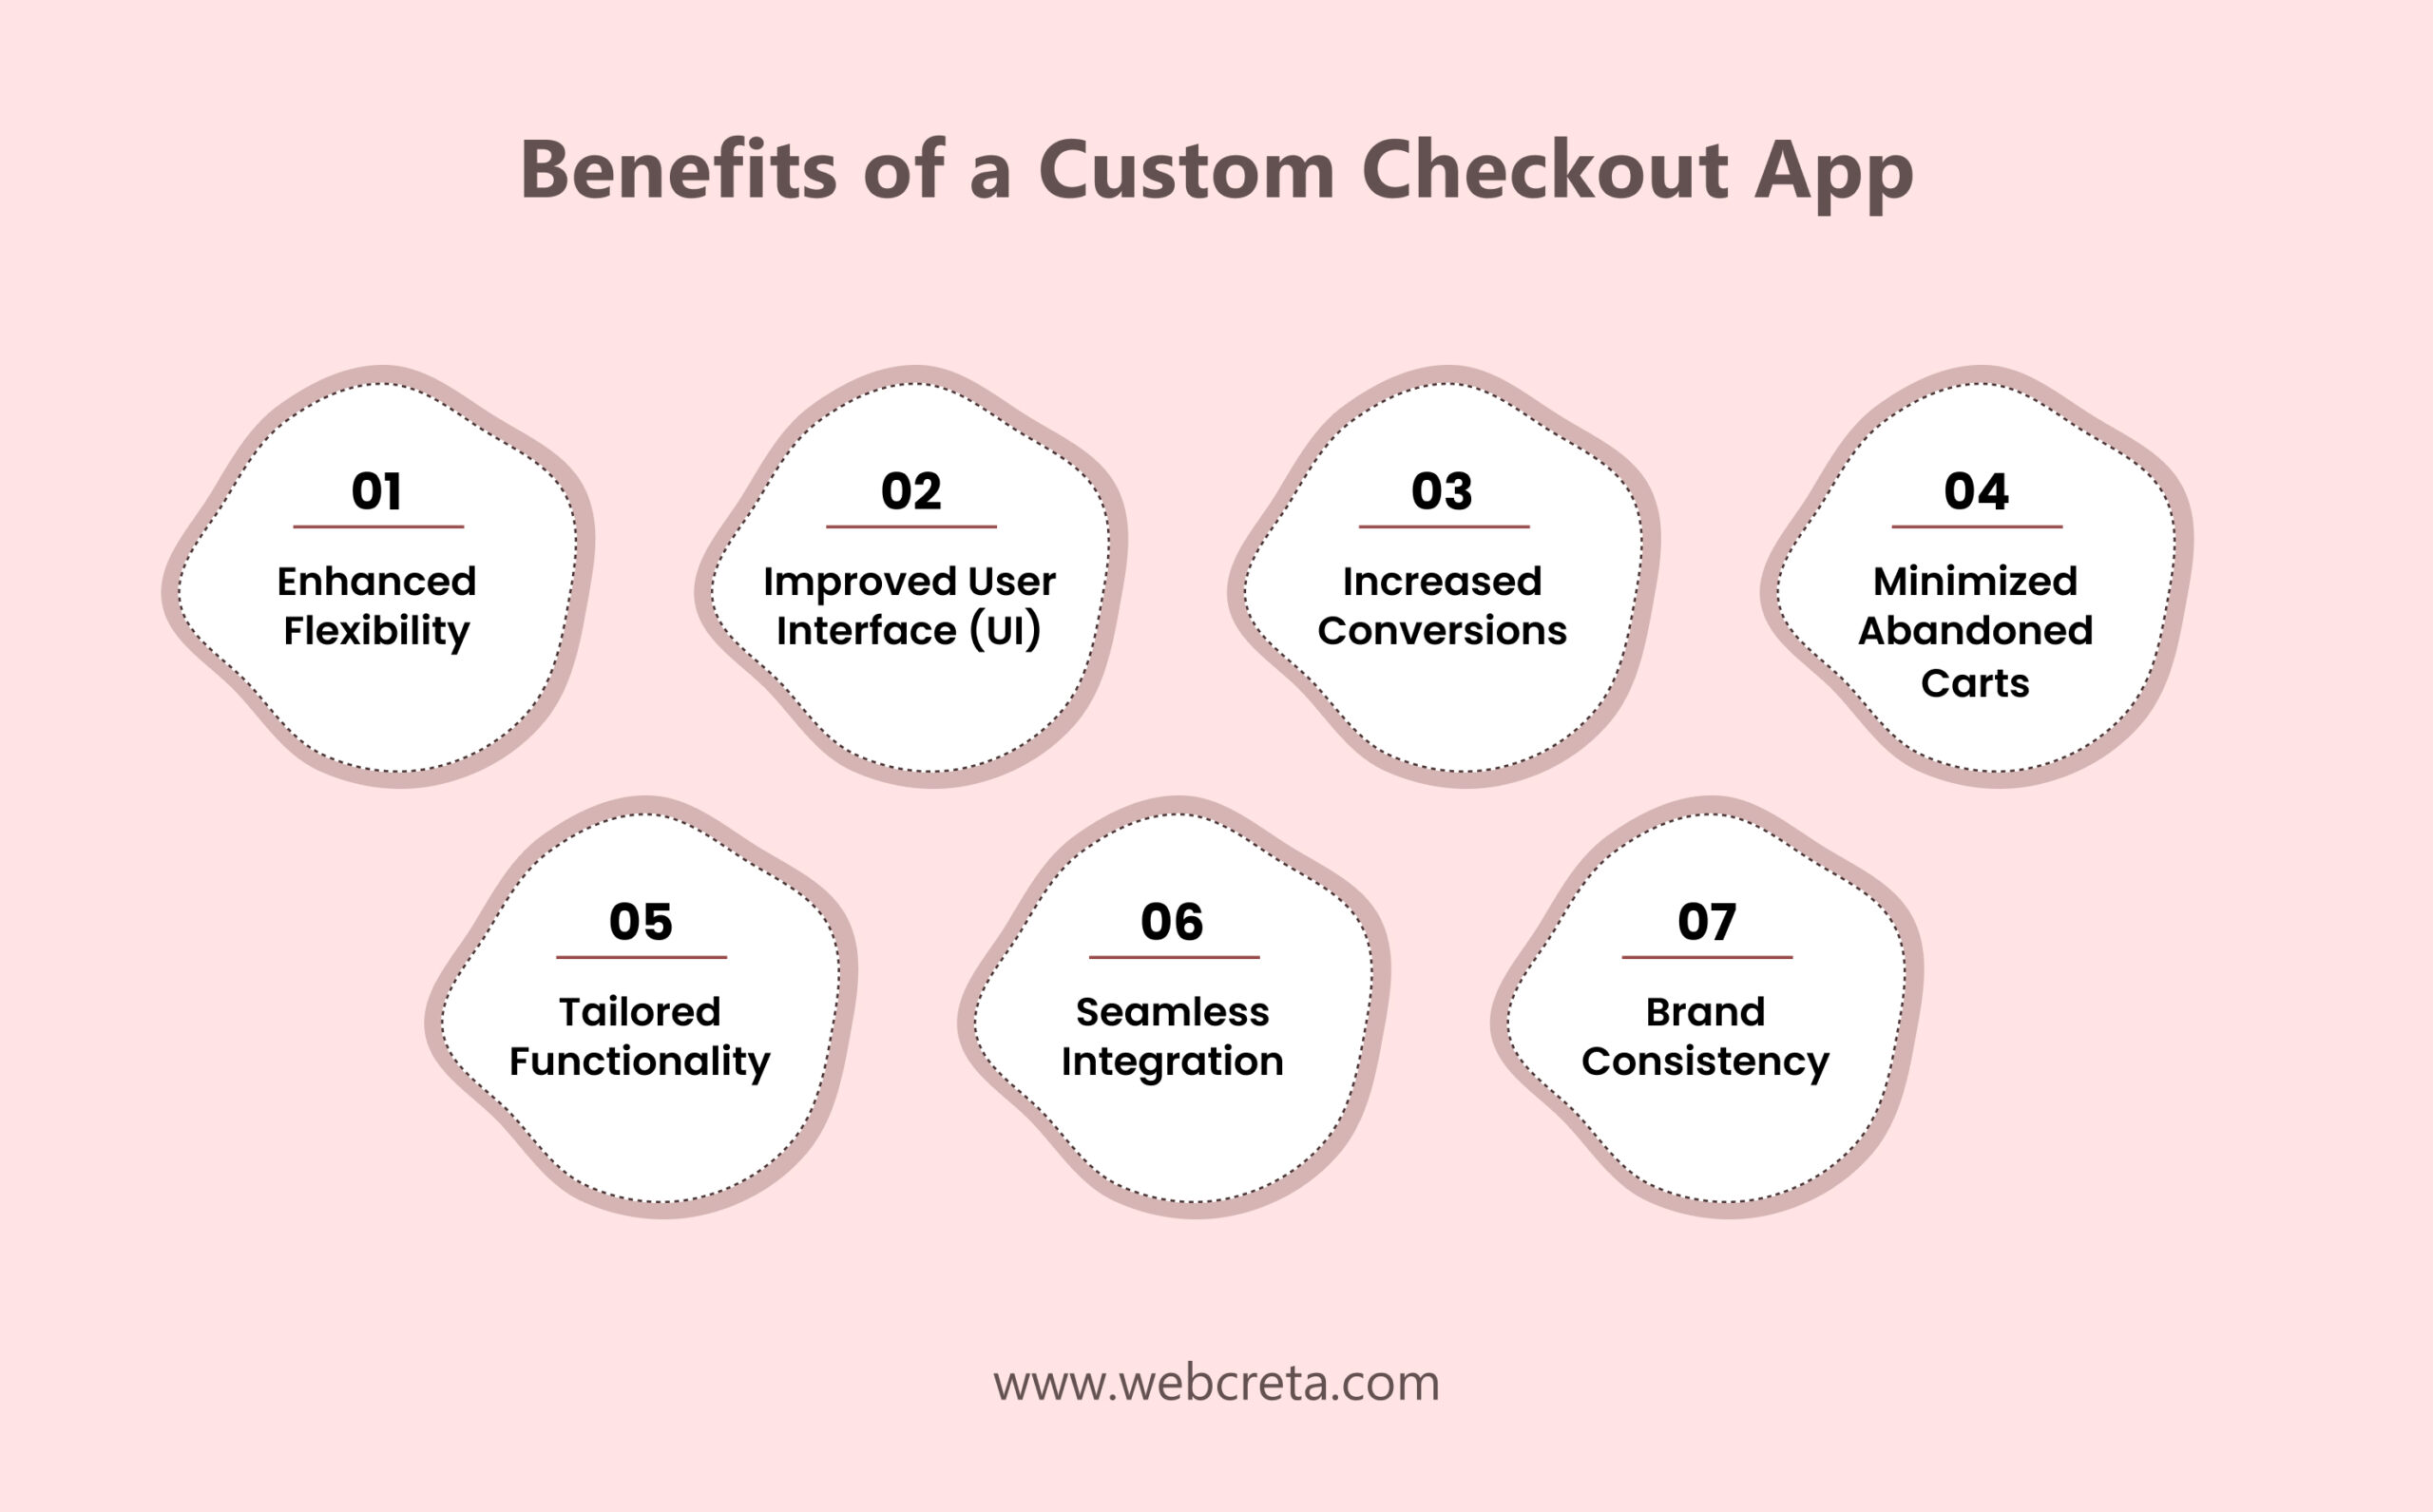 Benefits of a Custom Checkout App